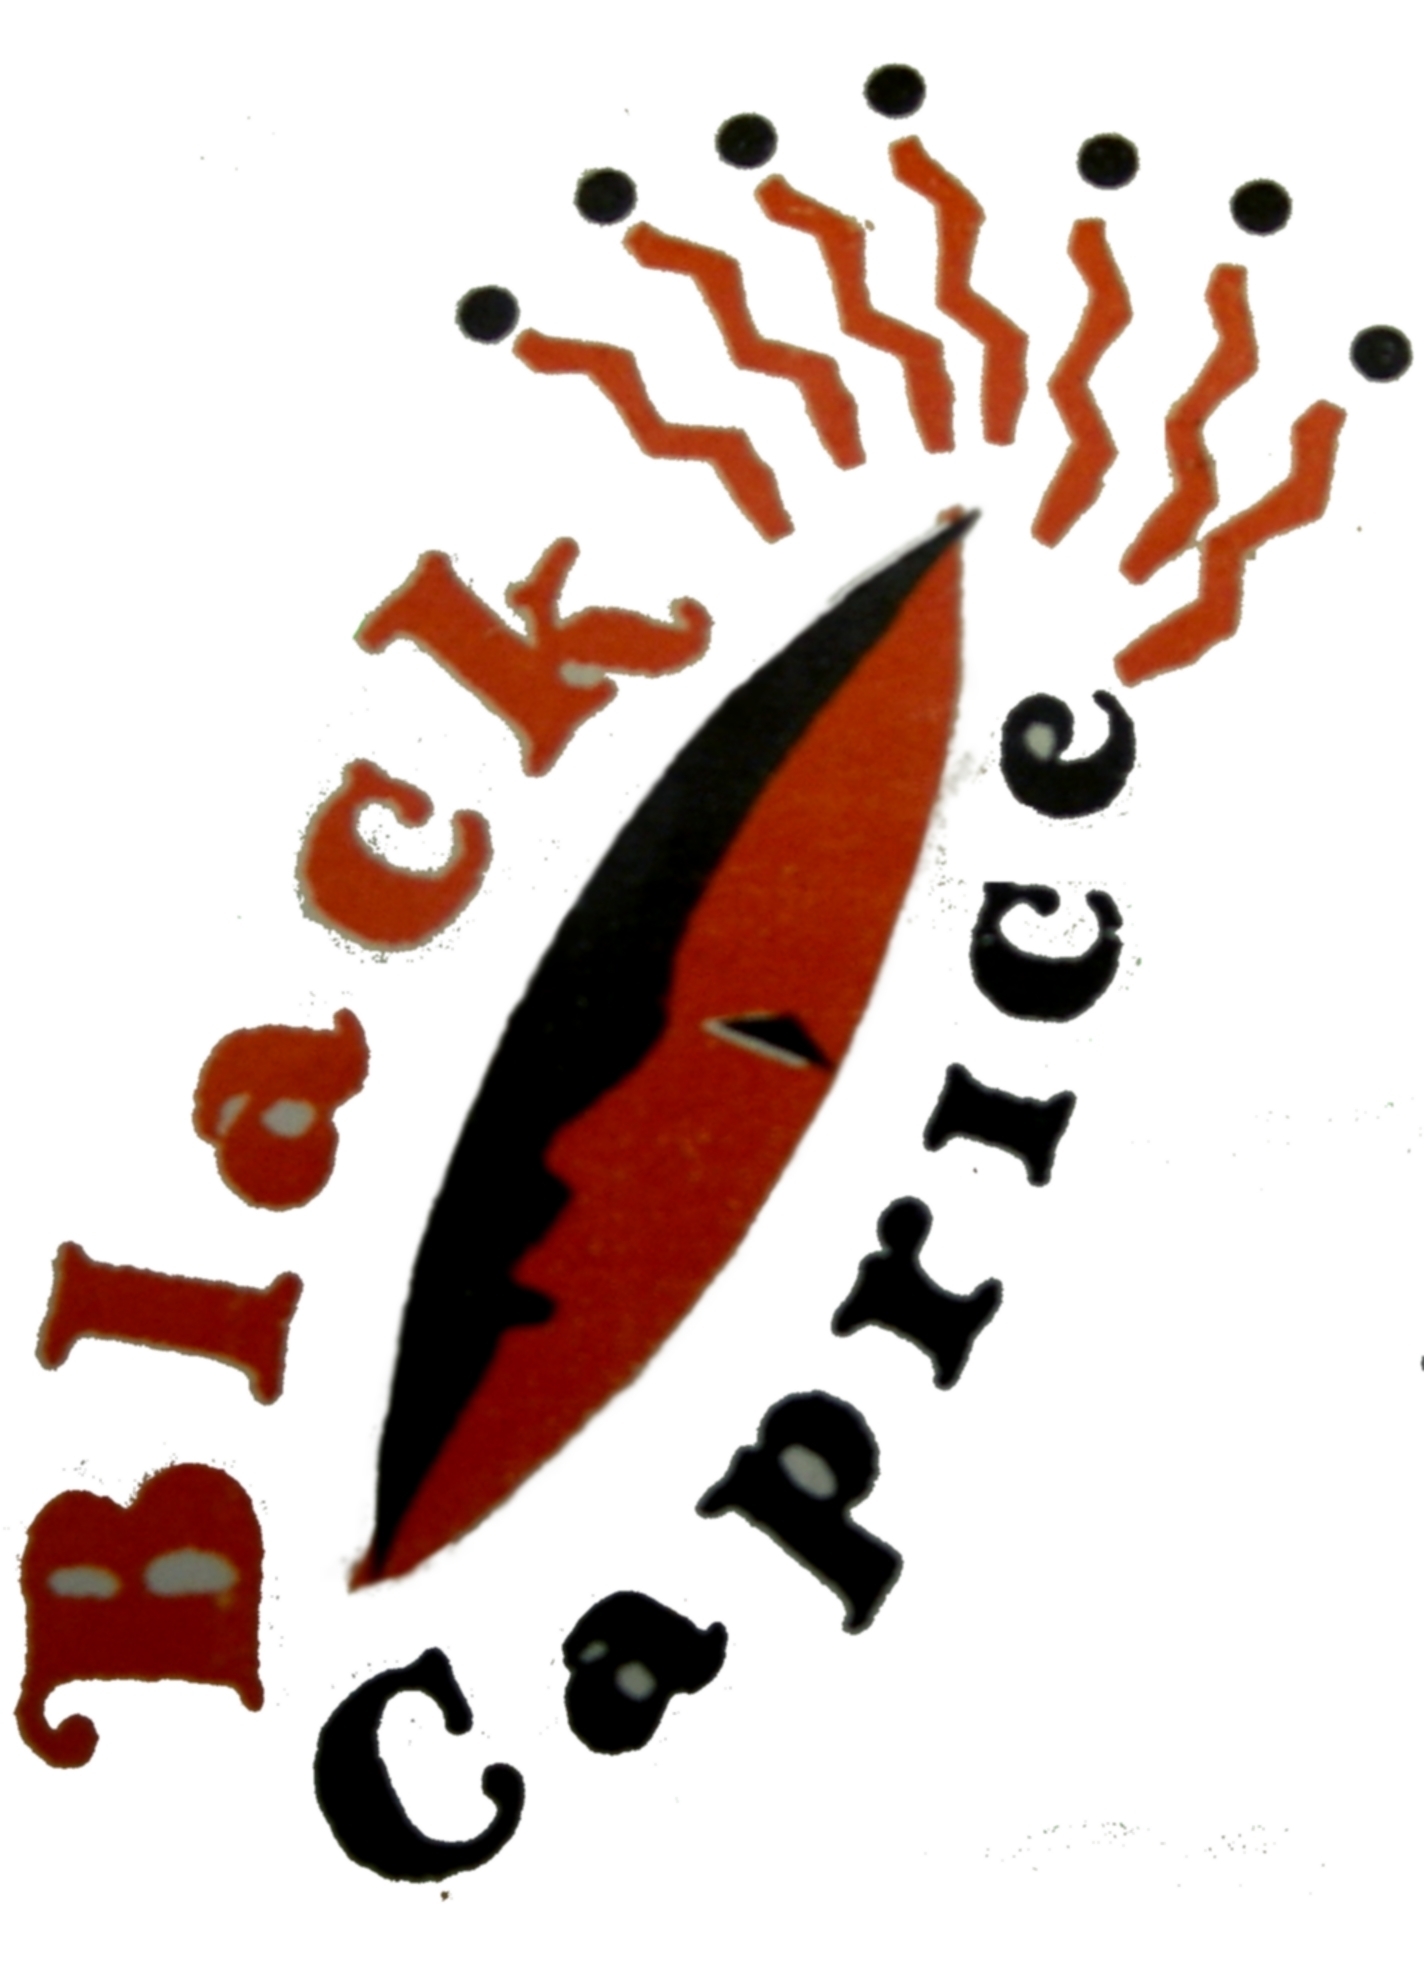 Black caprice